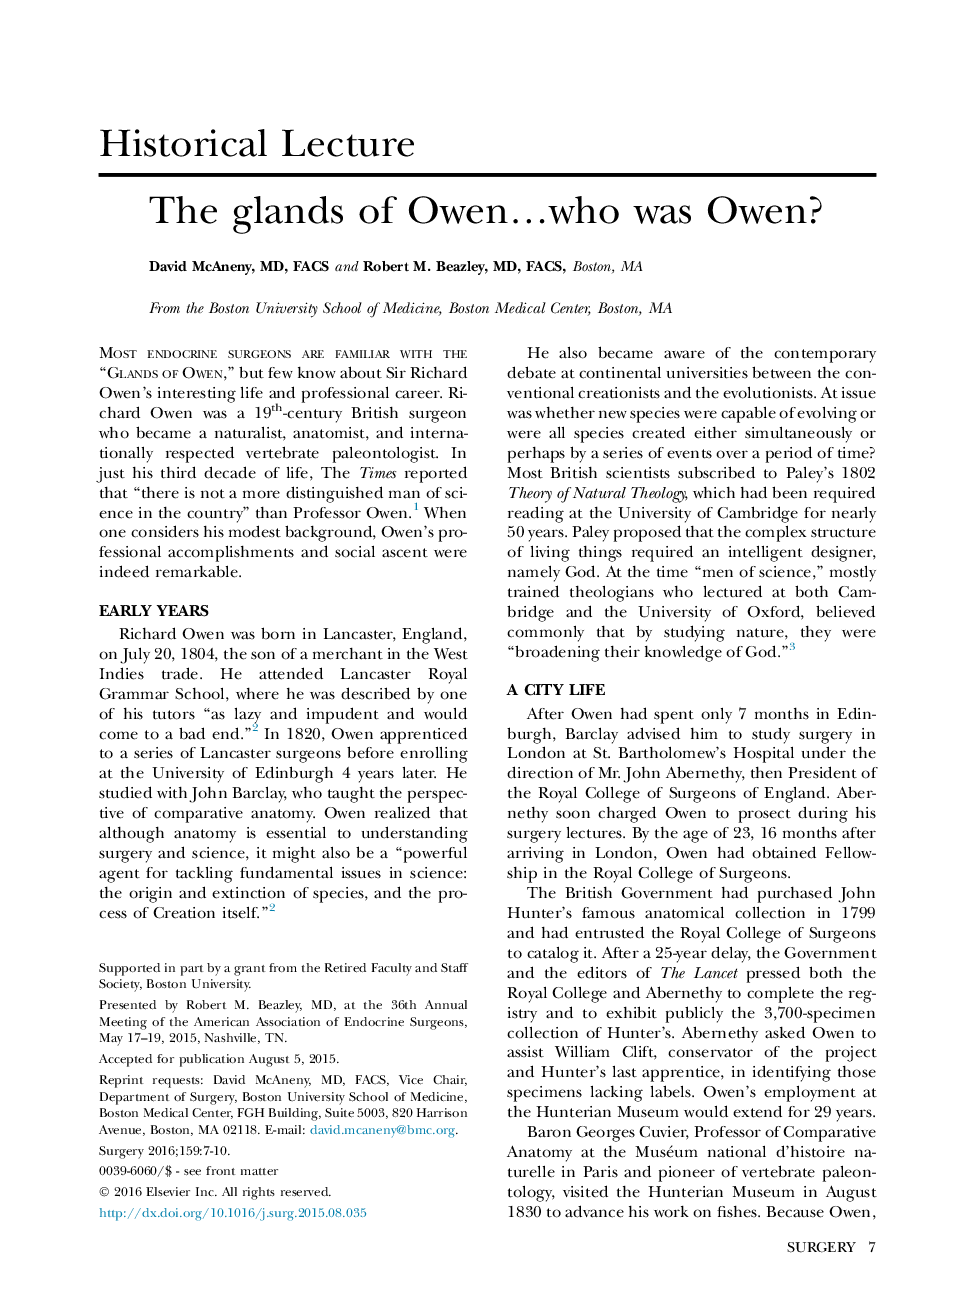 The glands of Owenâ¦who was Owen?